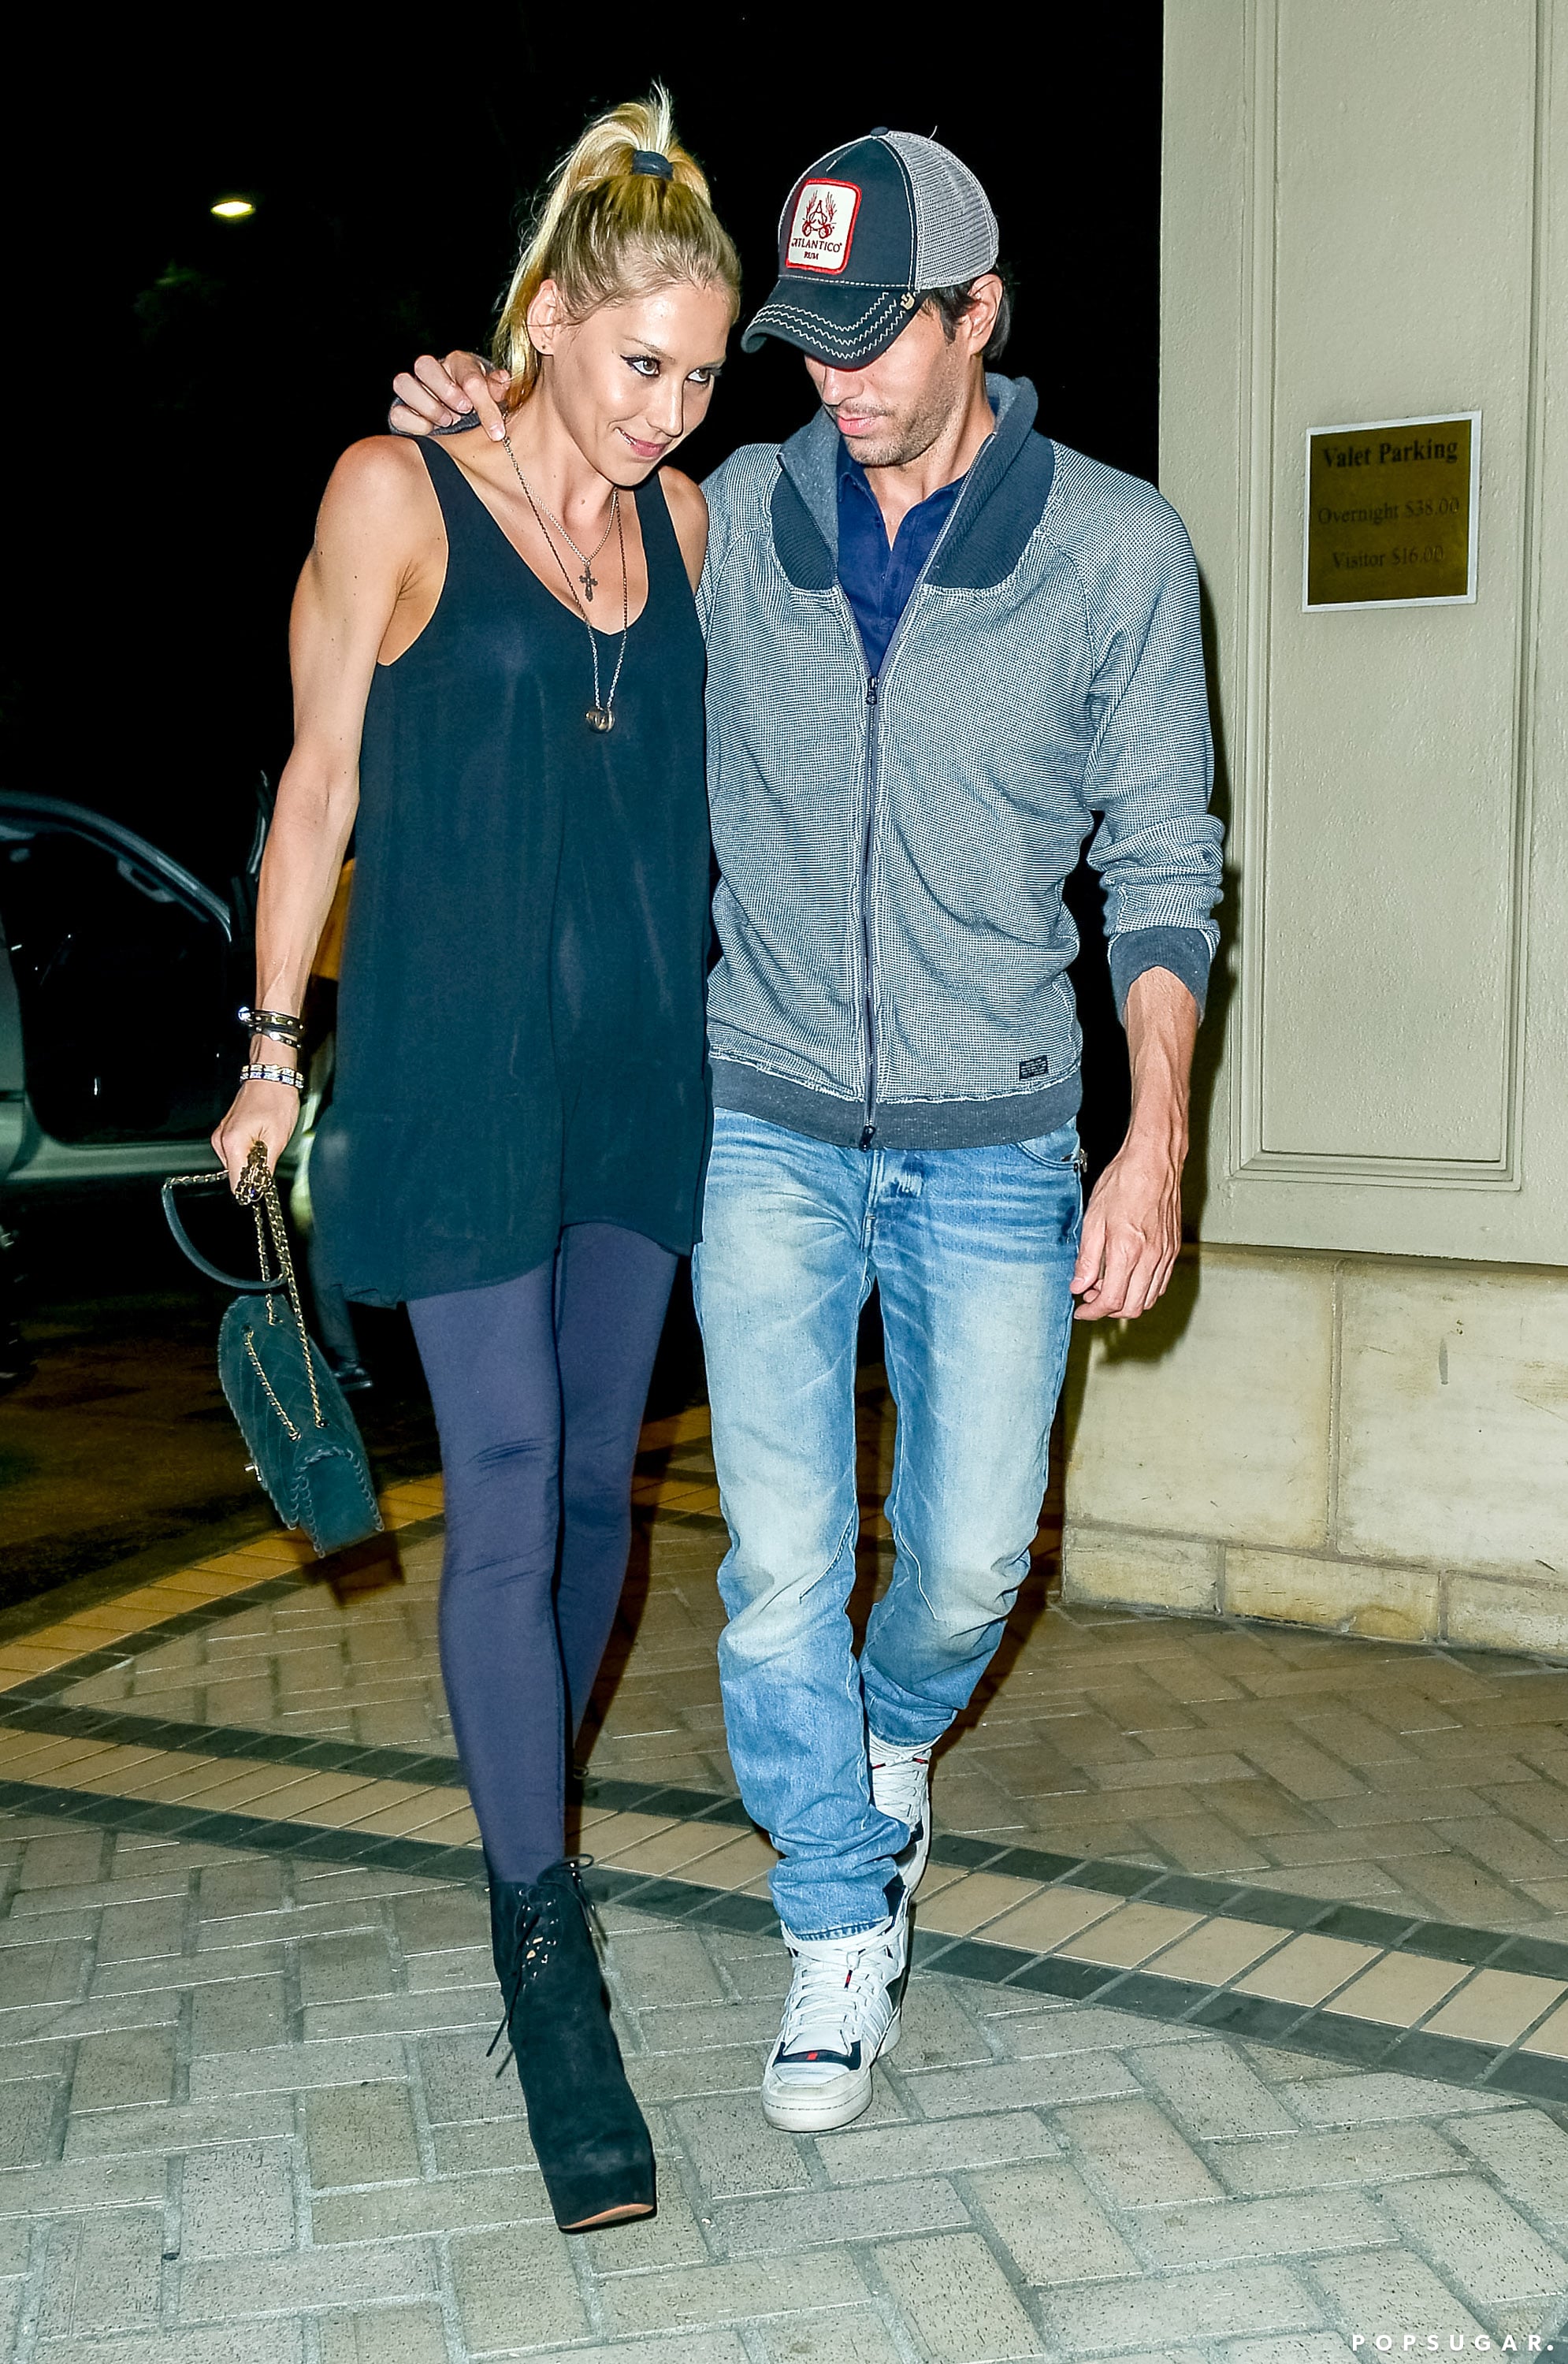 Truth behind Enrique Iglesias and Anna Kournikova's private 21-year  relationship